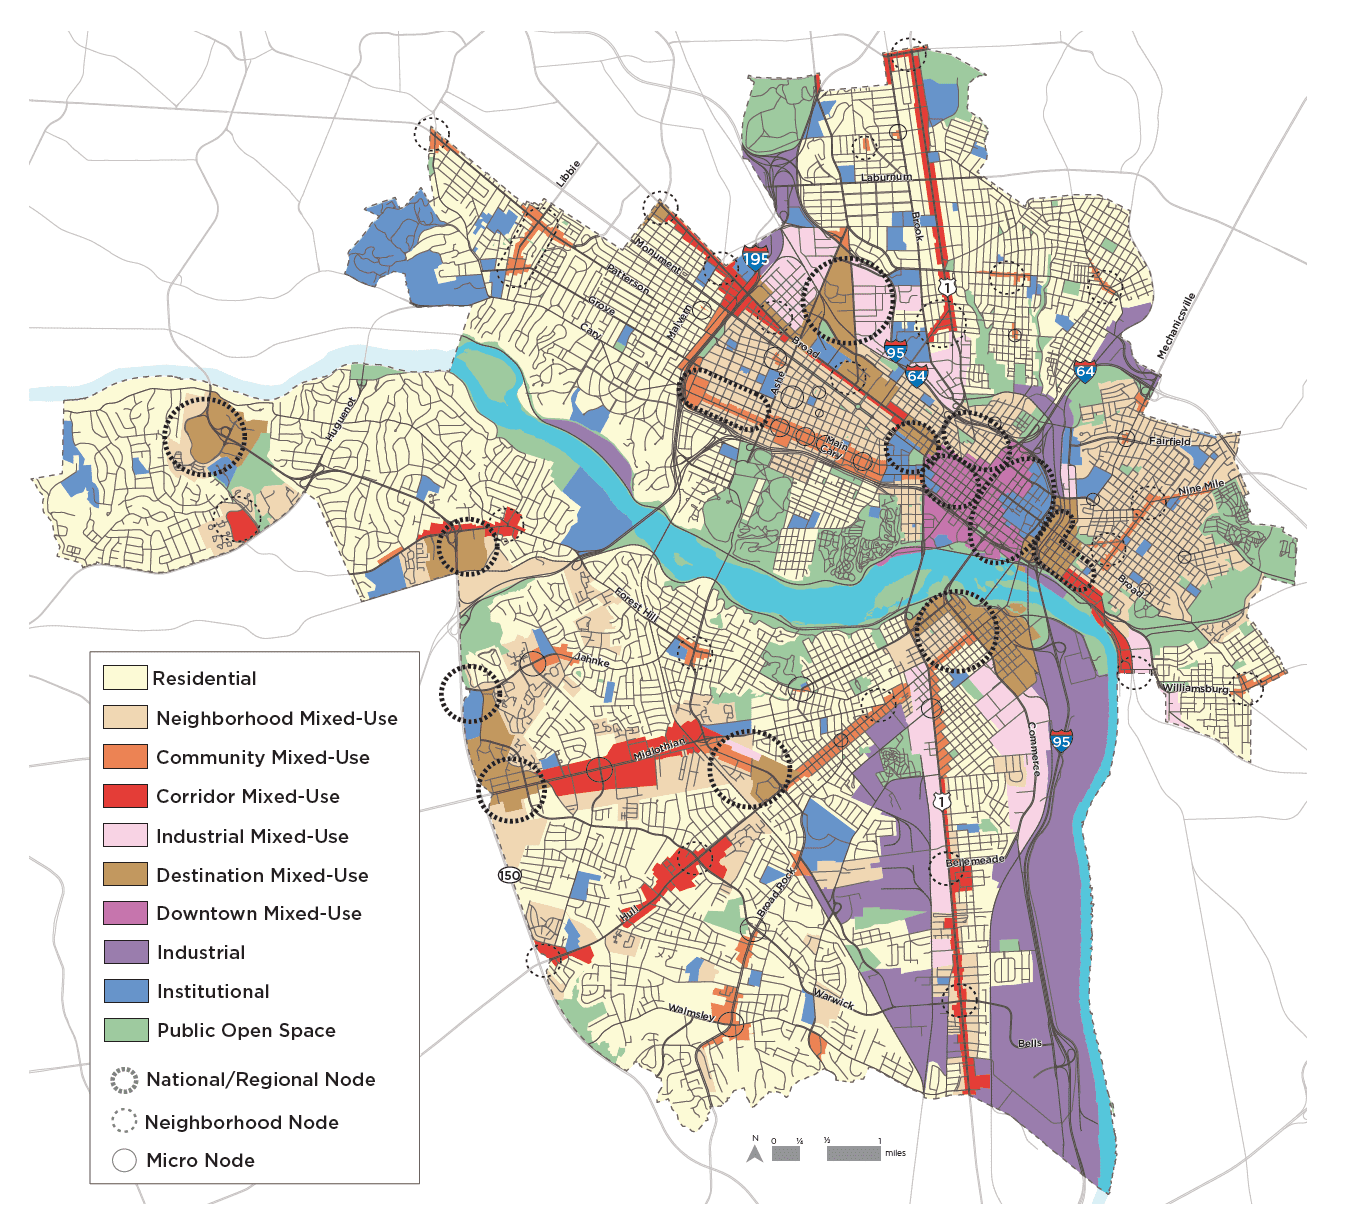 Future Land Use Map